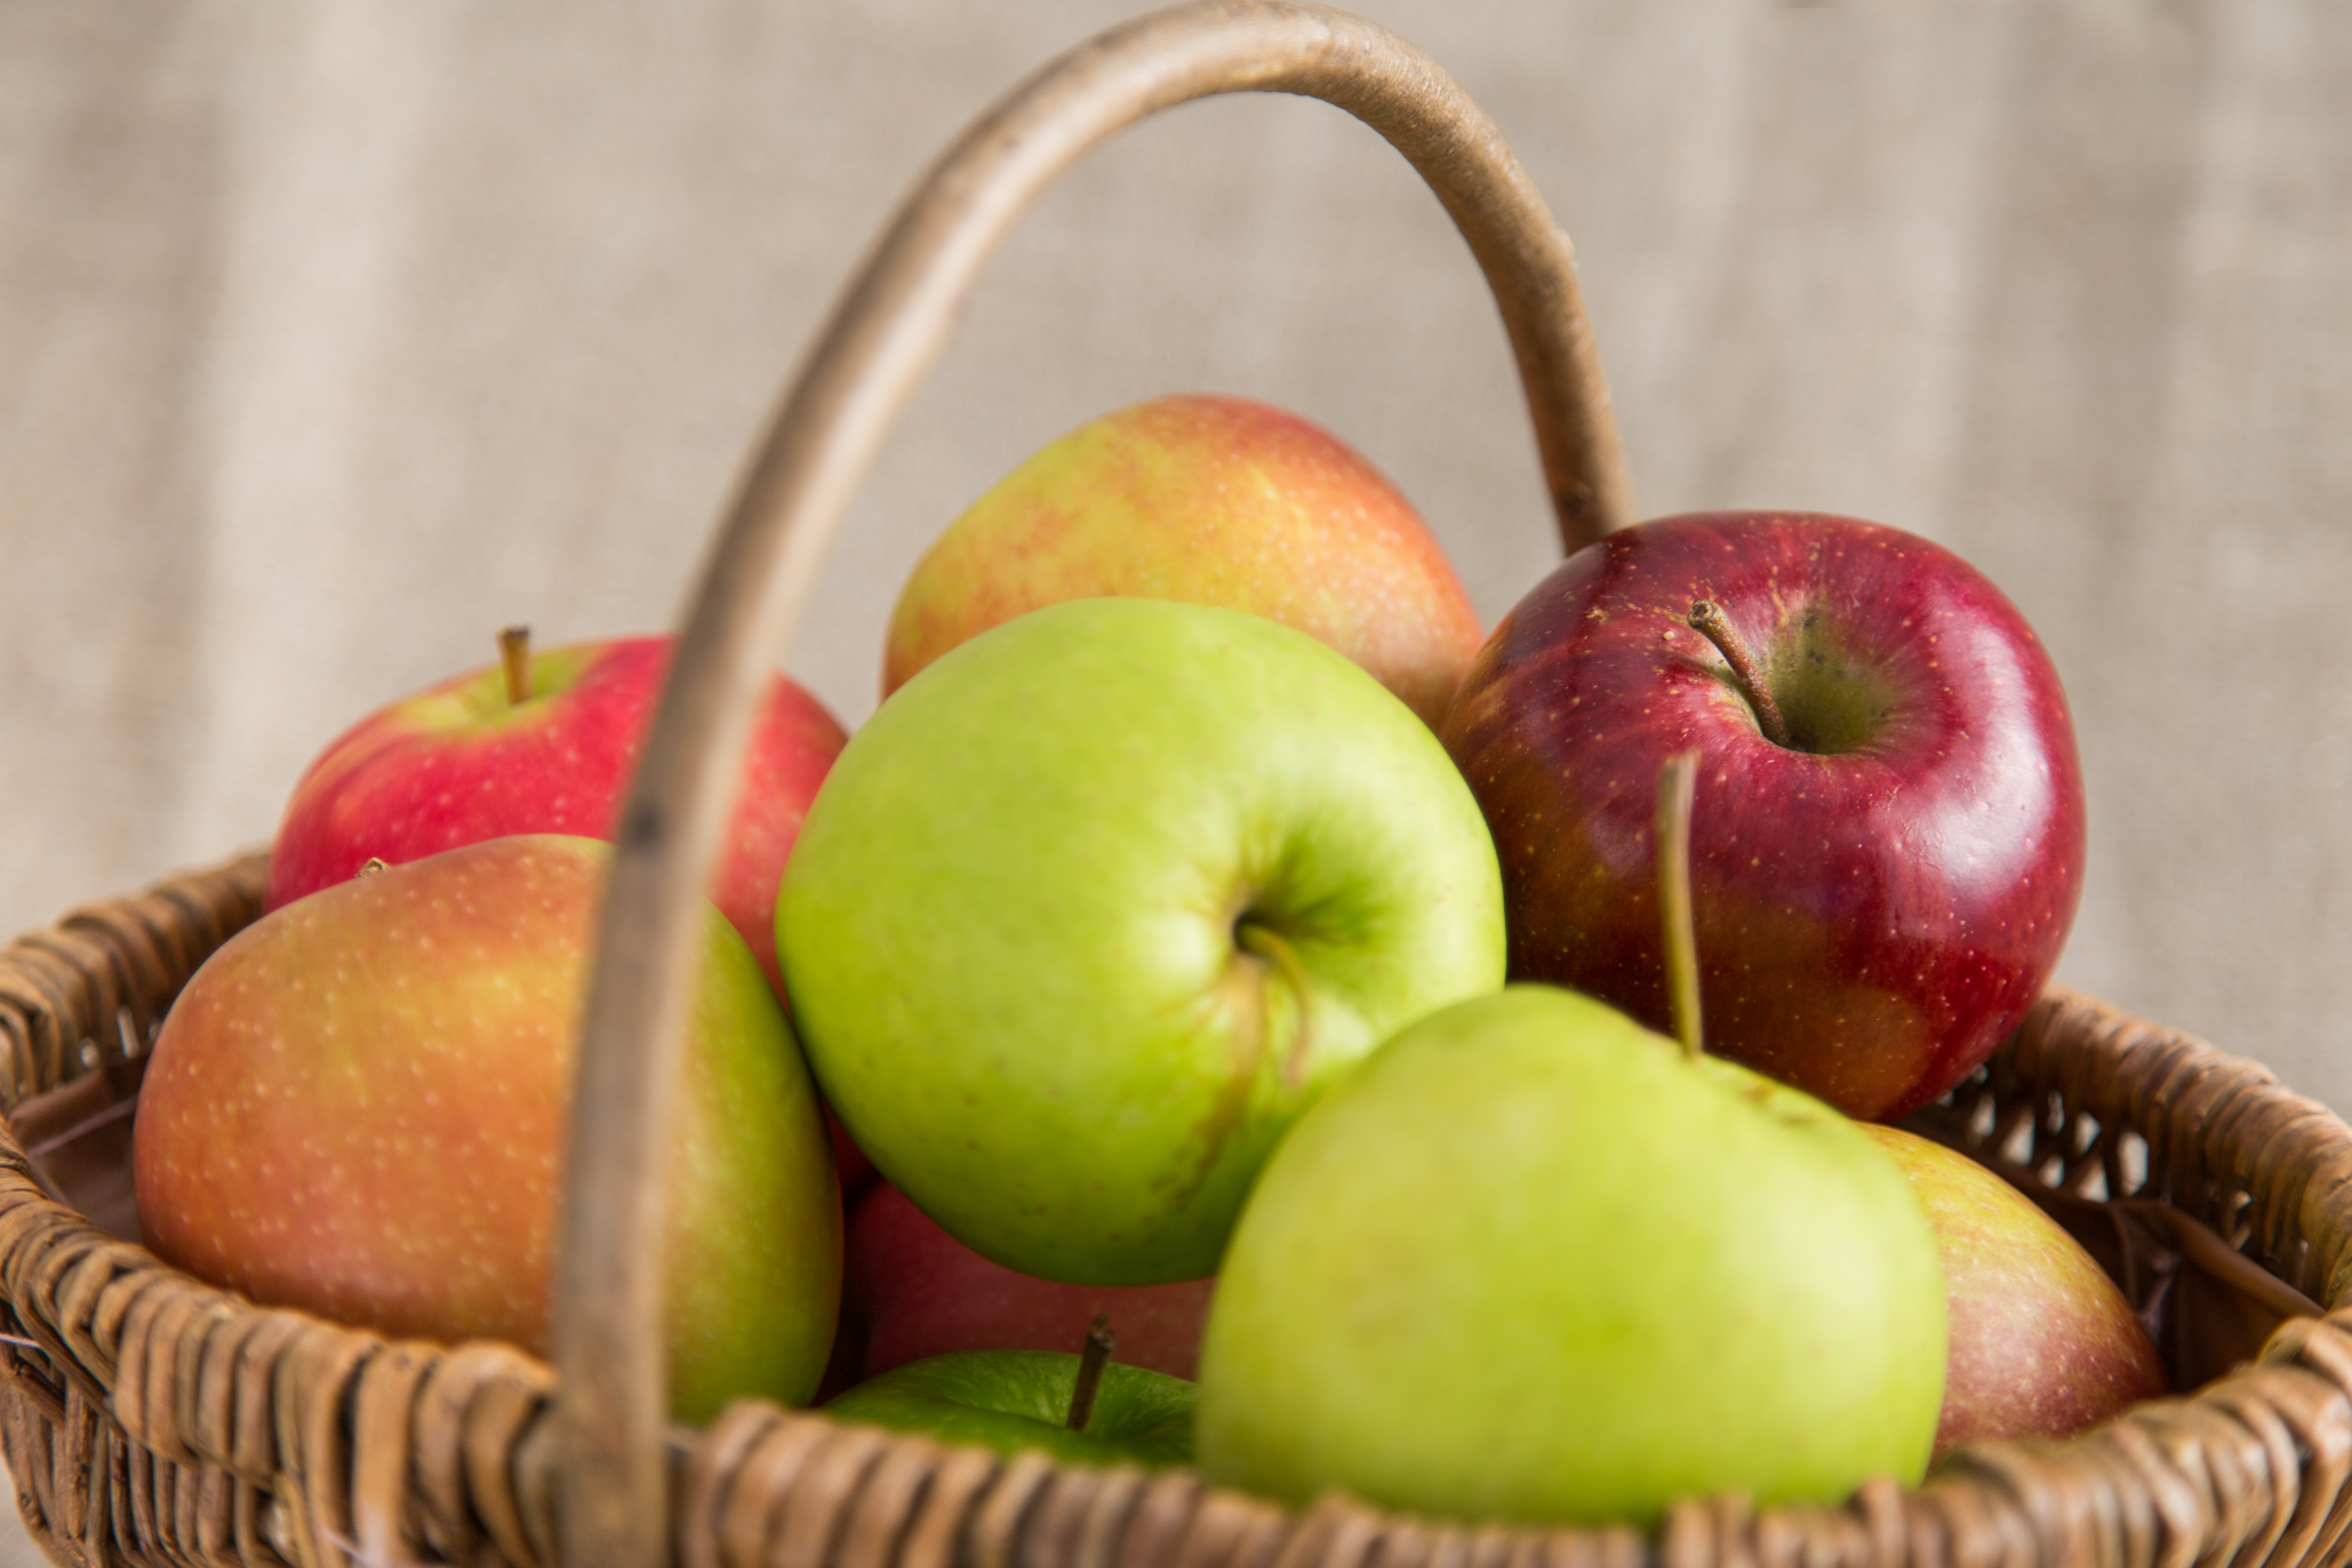 Apples, mixed (1 kg) - Sparshott Fruiterers